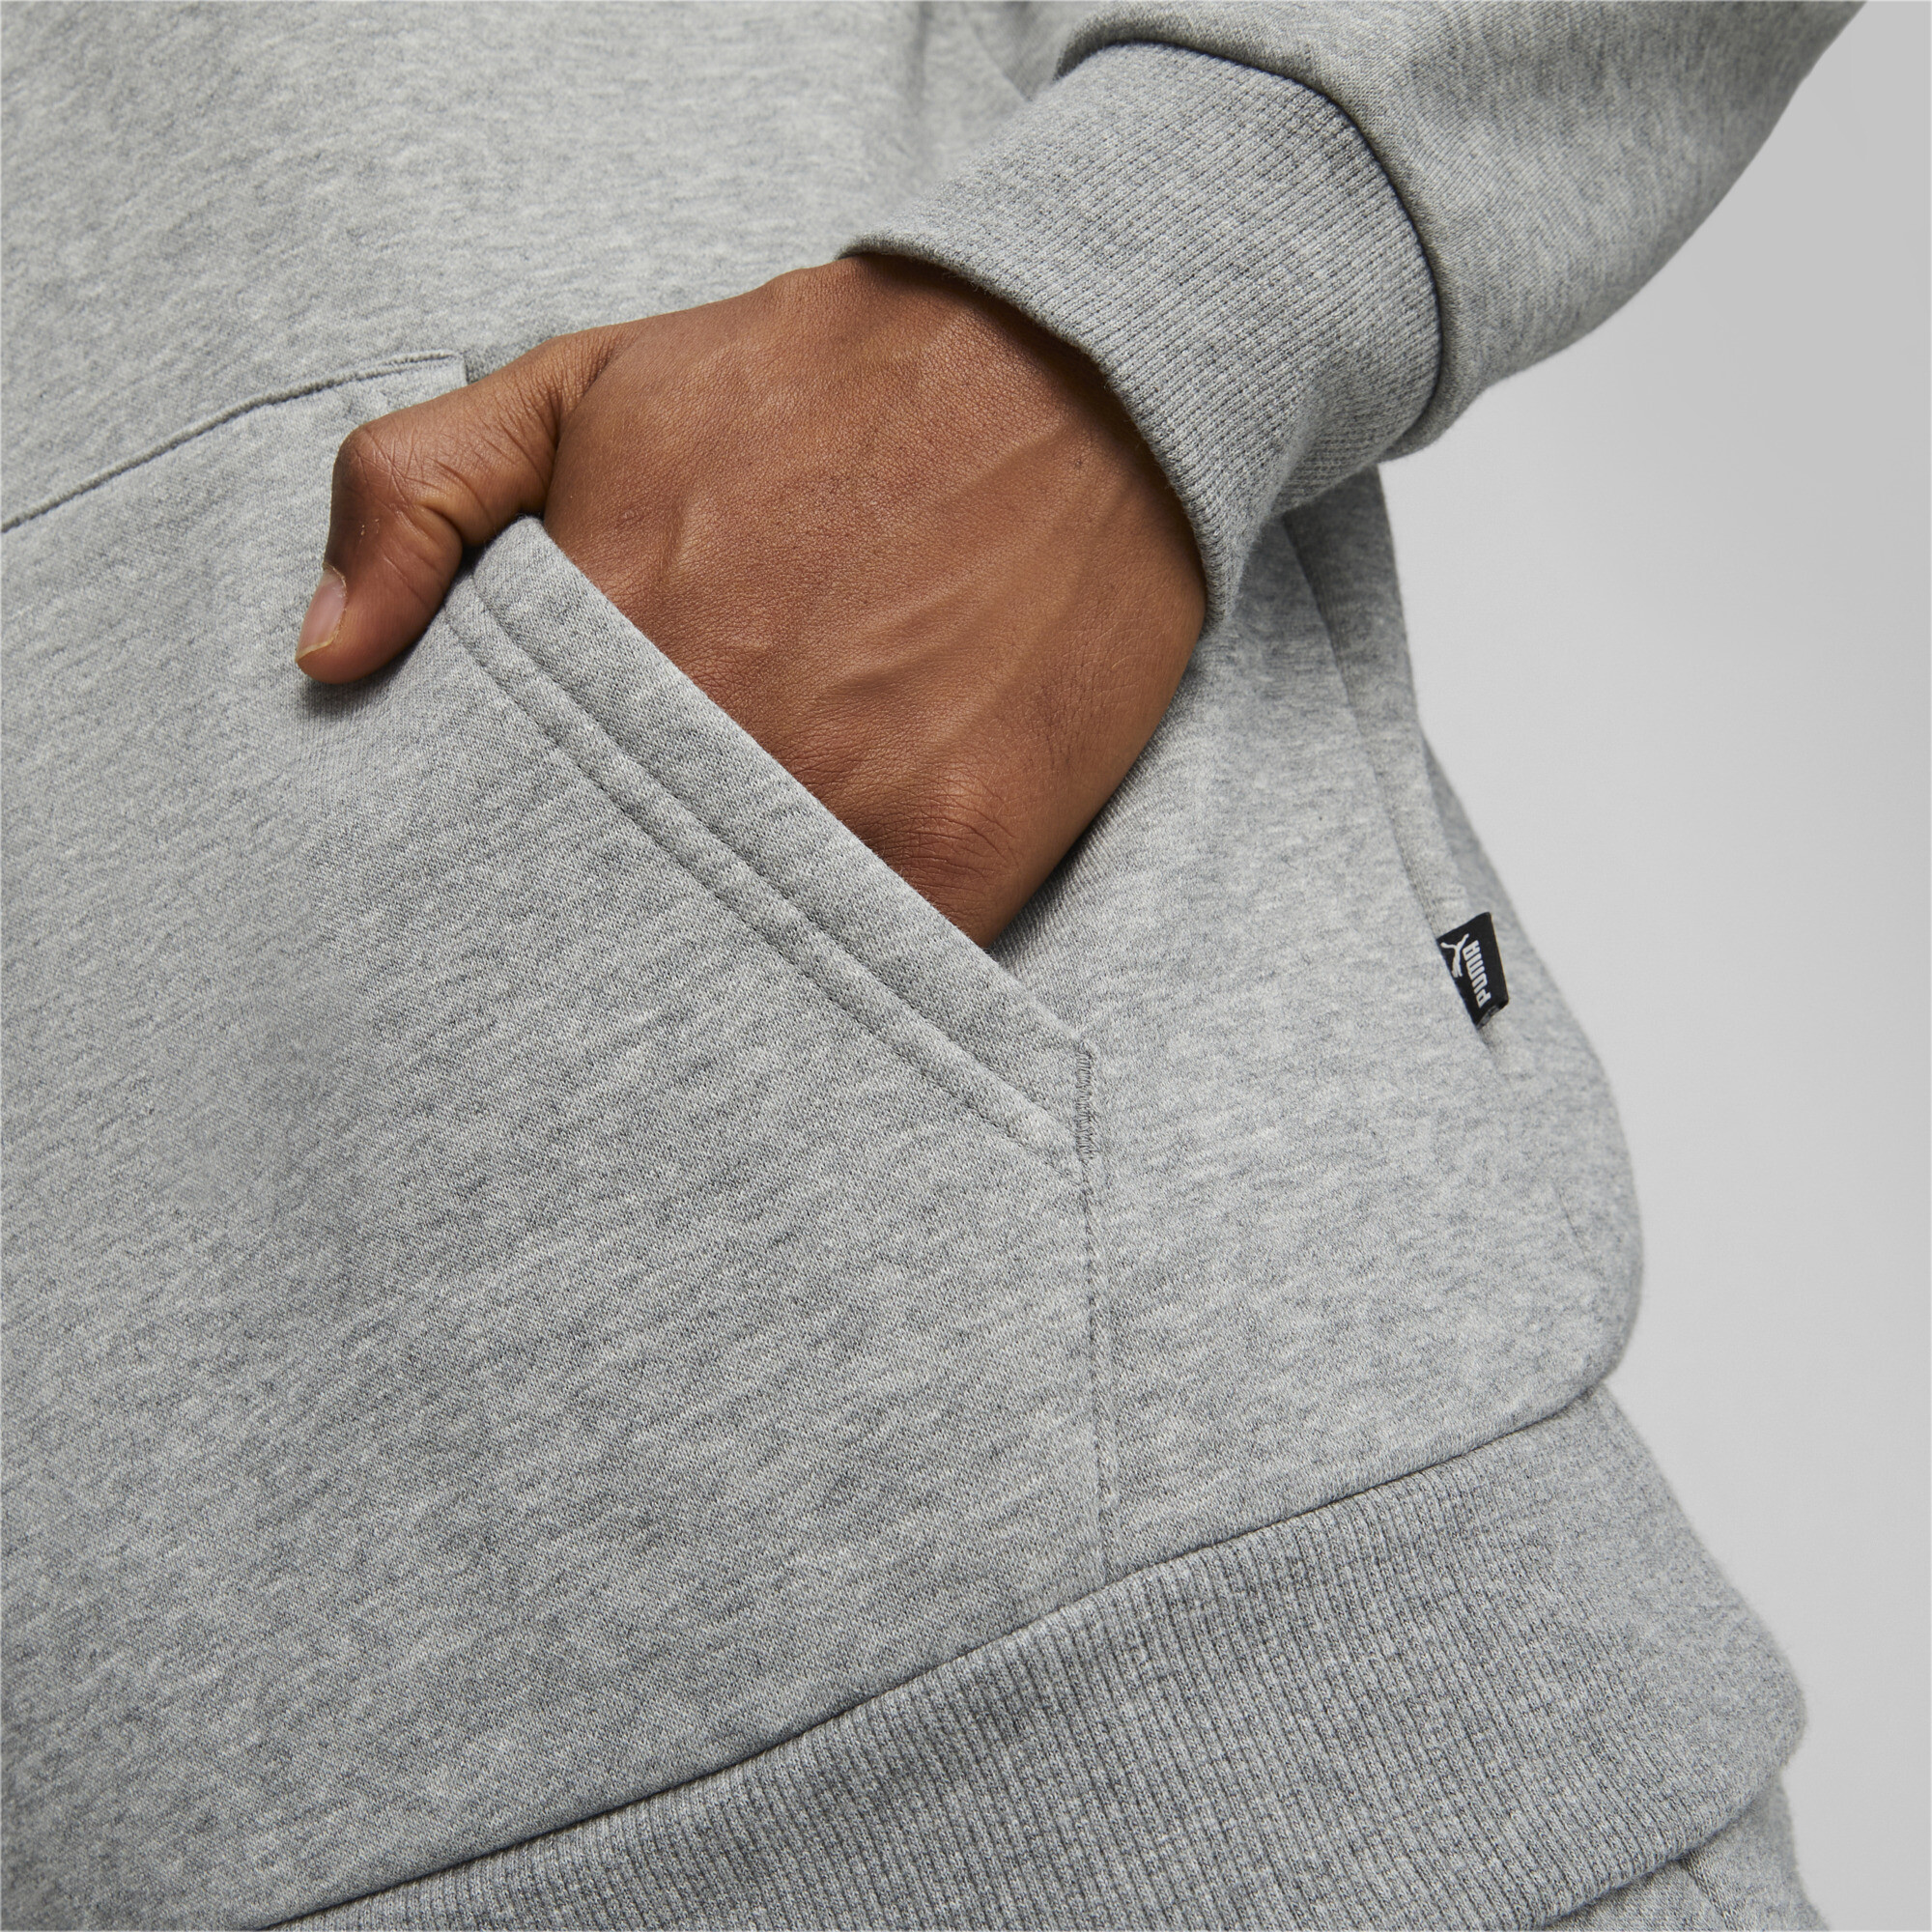 Men's Puma Essentials Big Logo Hoodie, Gray, Size 3XL, Clothing